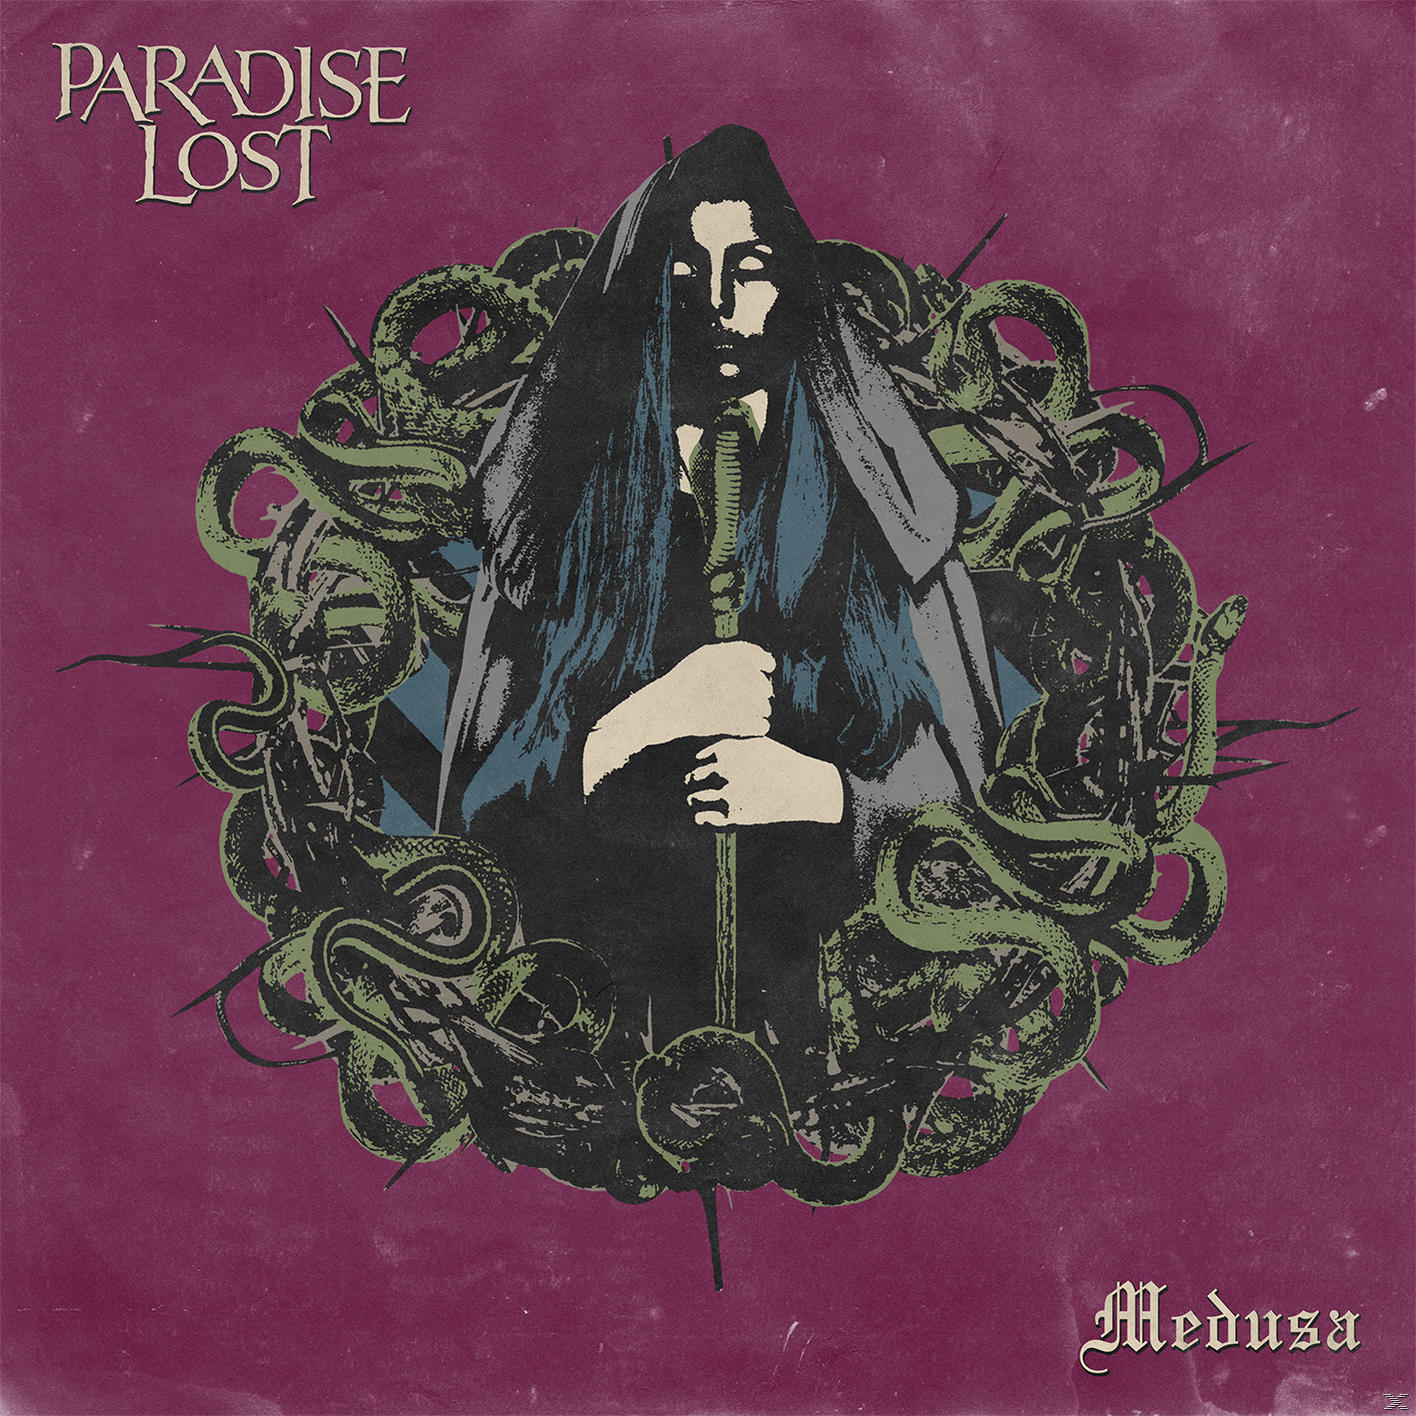 Lost + Bonus-CD) (LP Medusa (Box) - CD - + Paradise